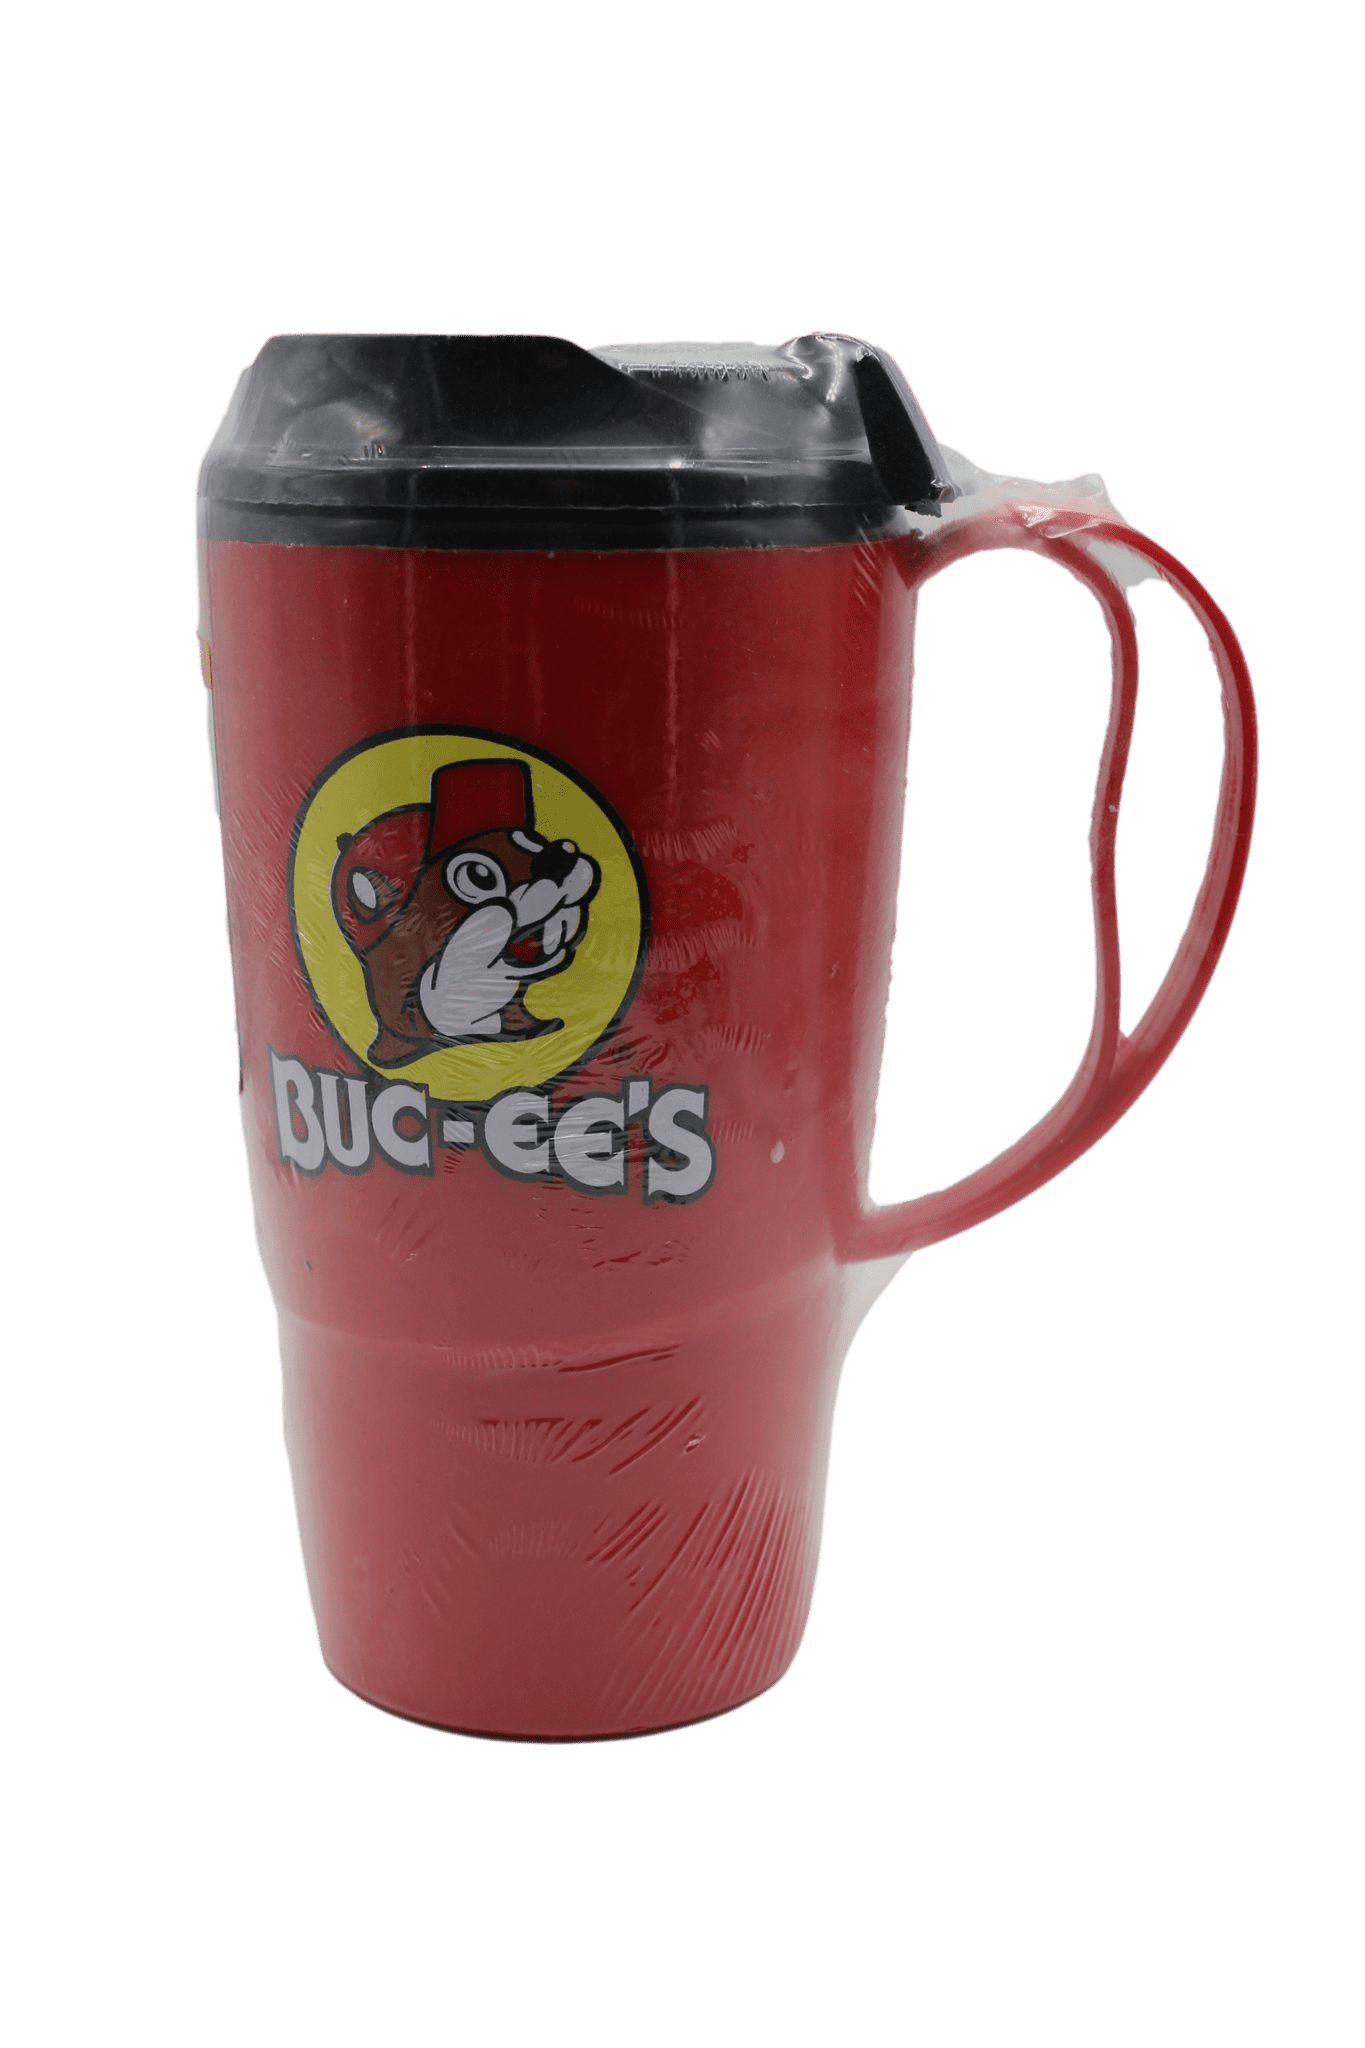 buc ee's coffee travel mug